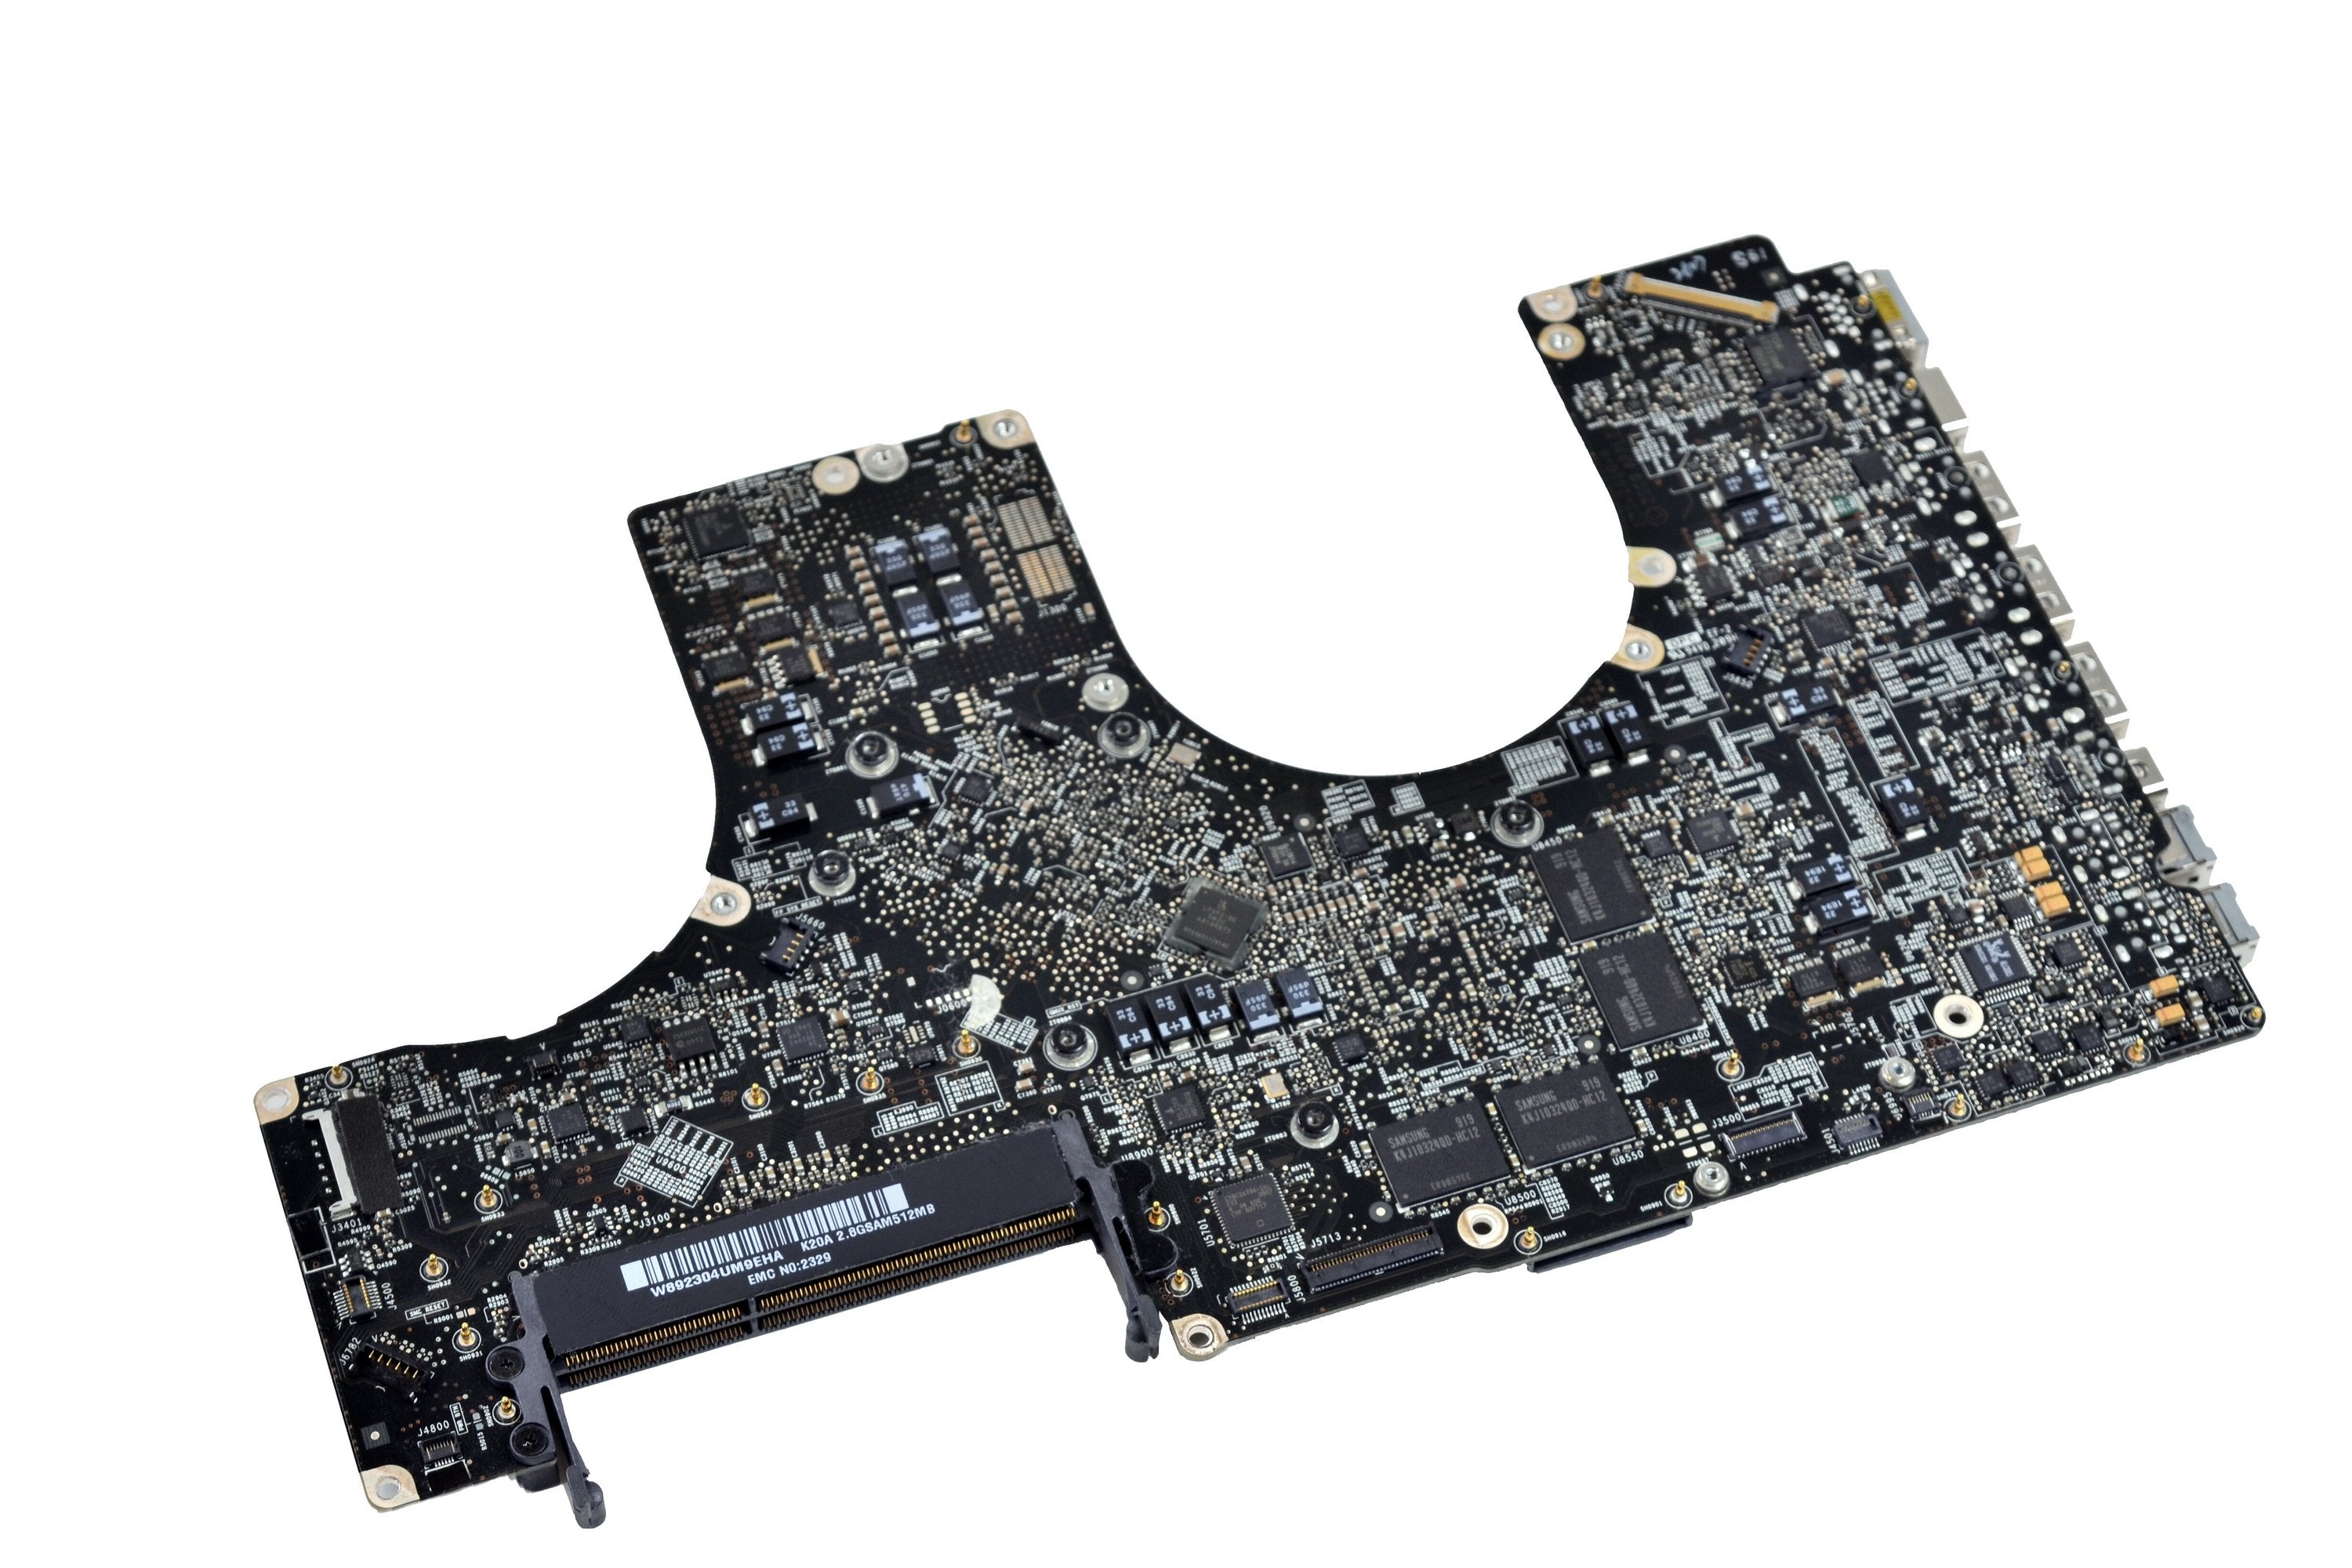 MacBook Pro 17" Unibody (Mid 2009) 2.8 GHz Logic Board